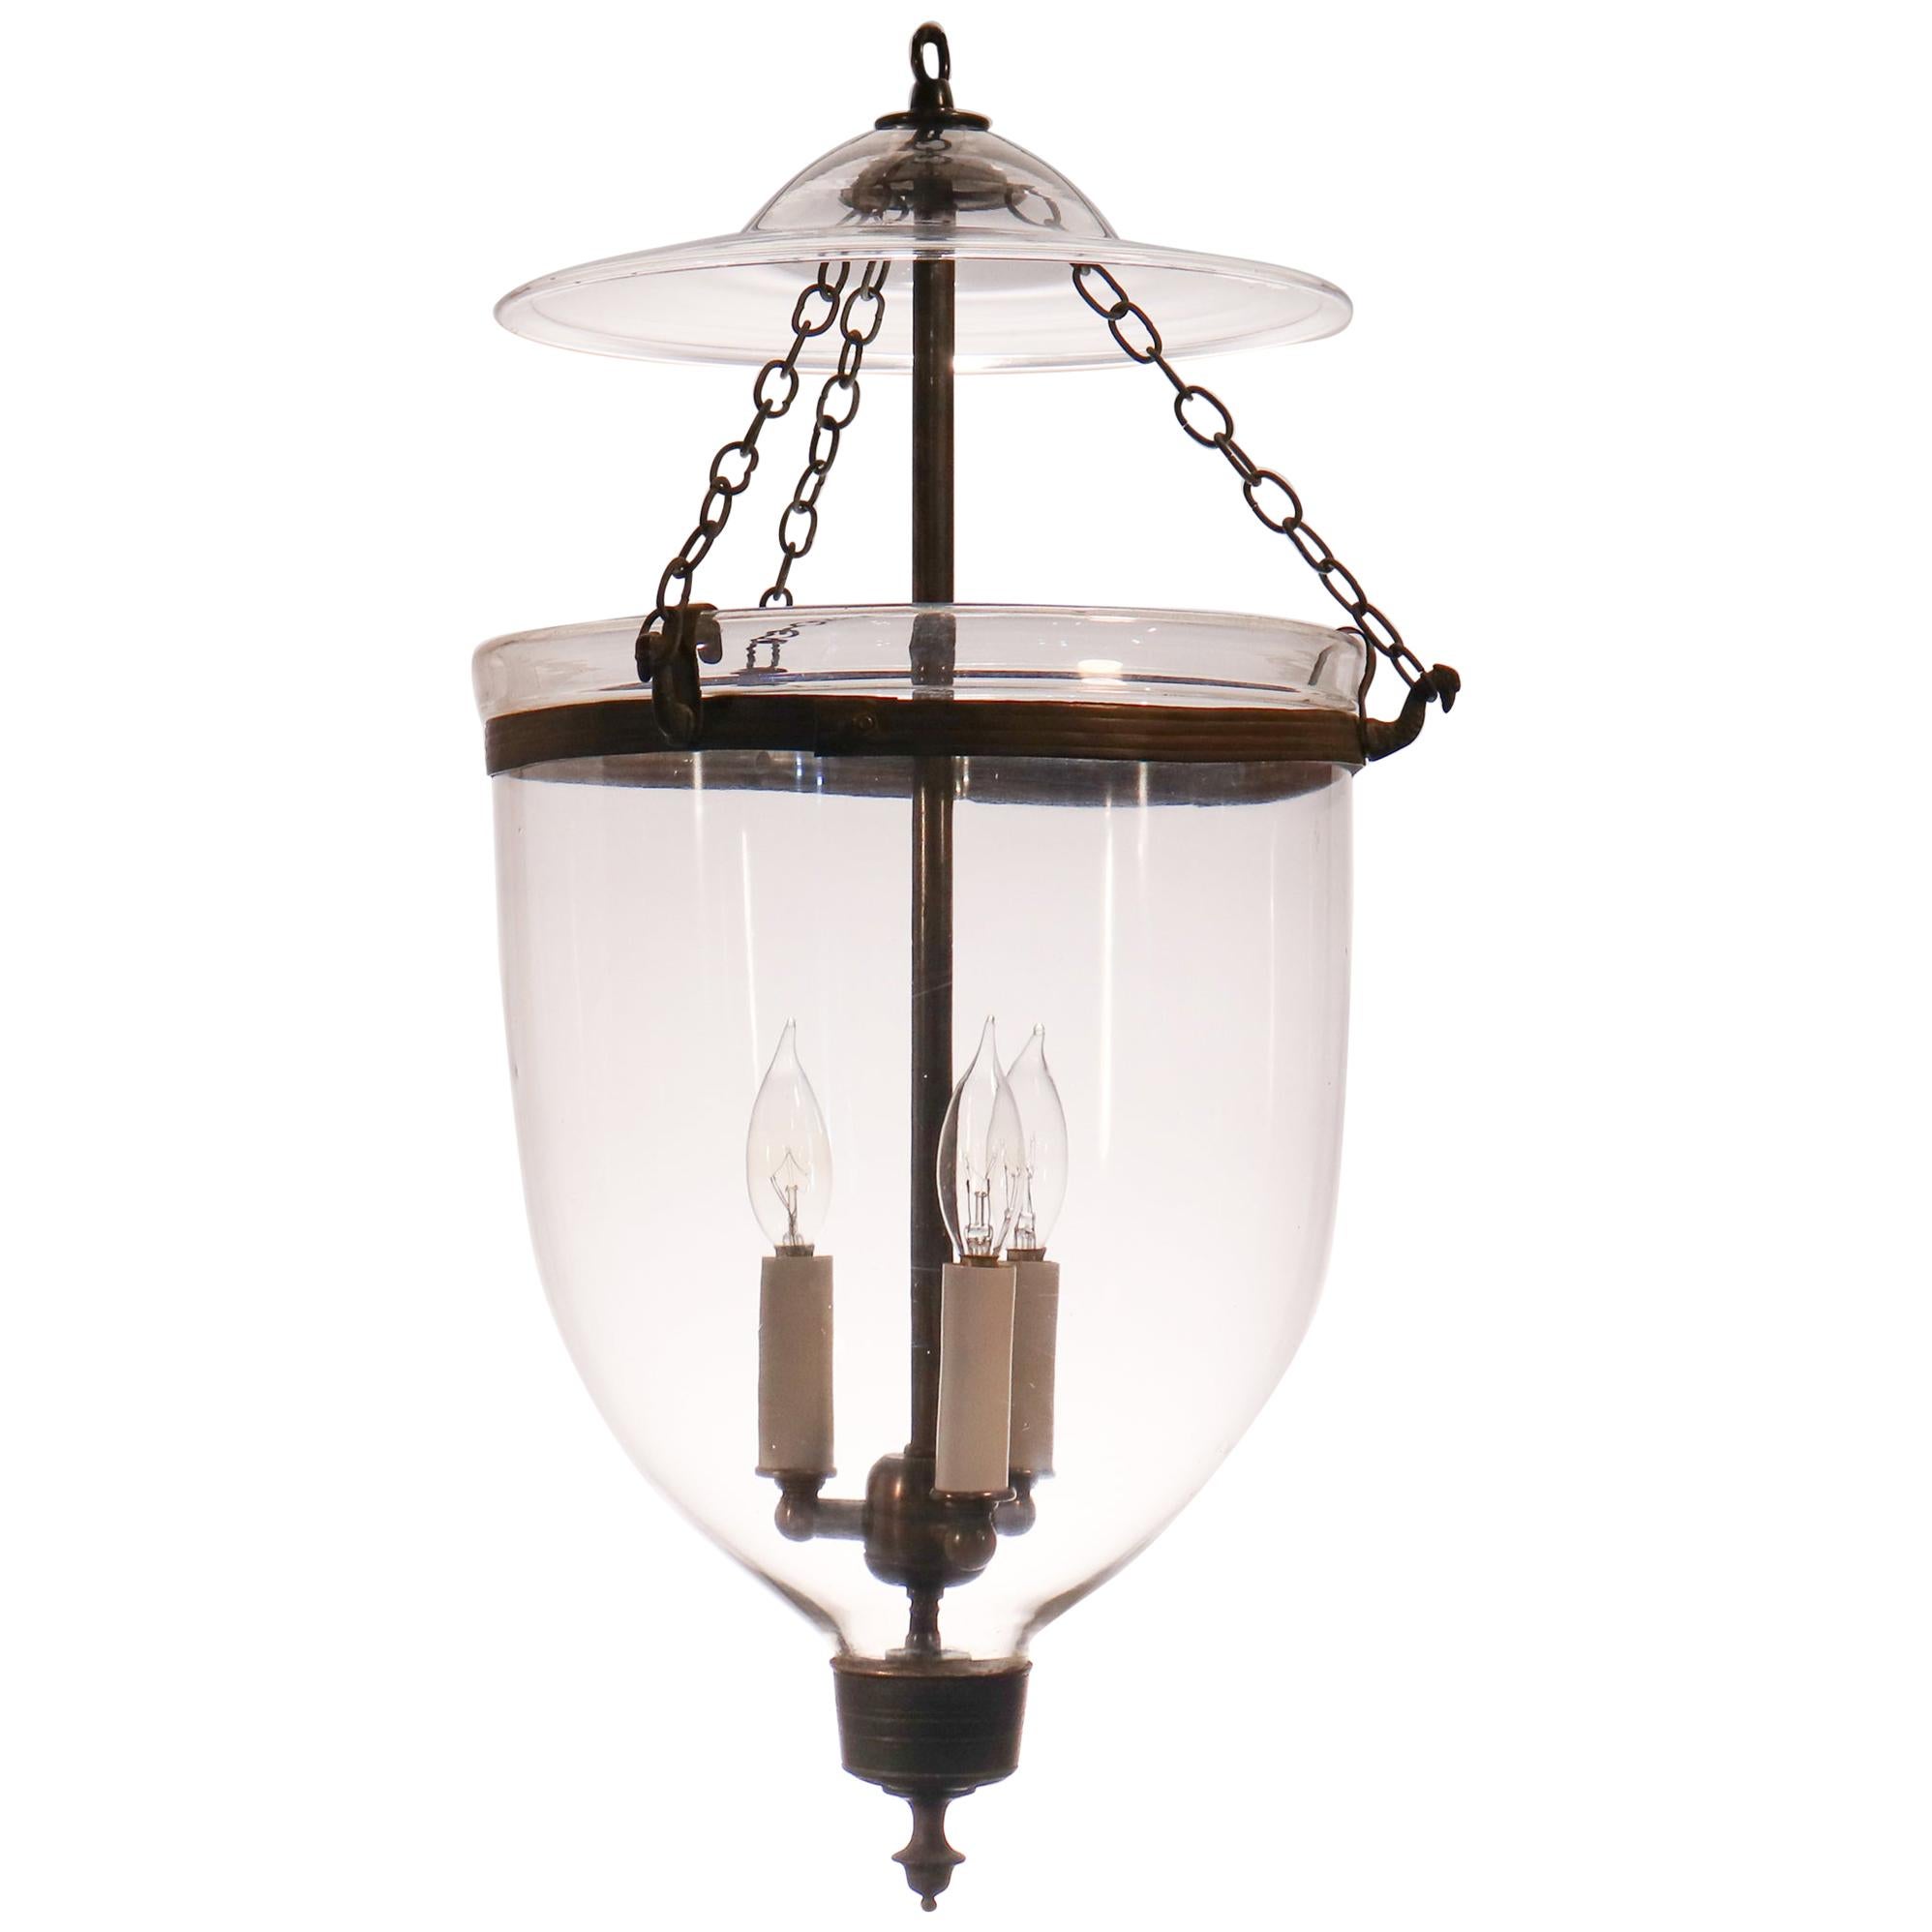 Antique English Clear Glass Bell Jar Lantern